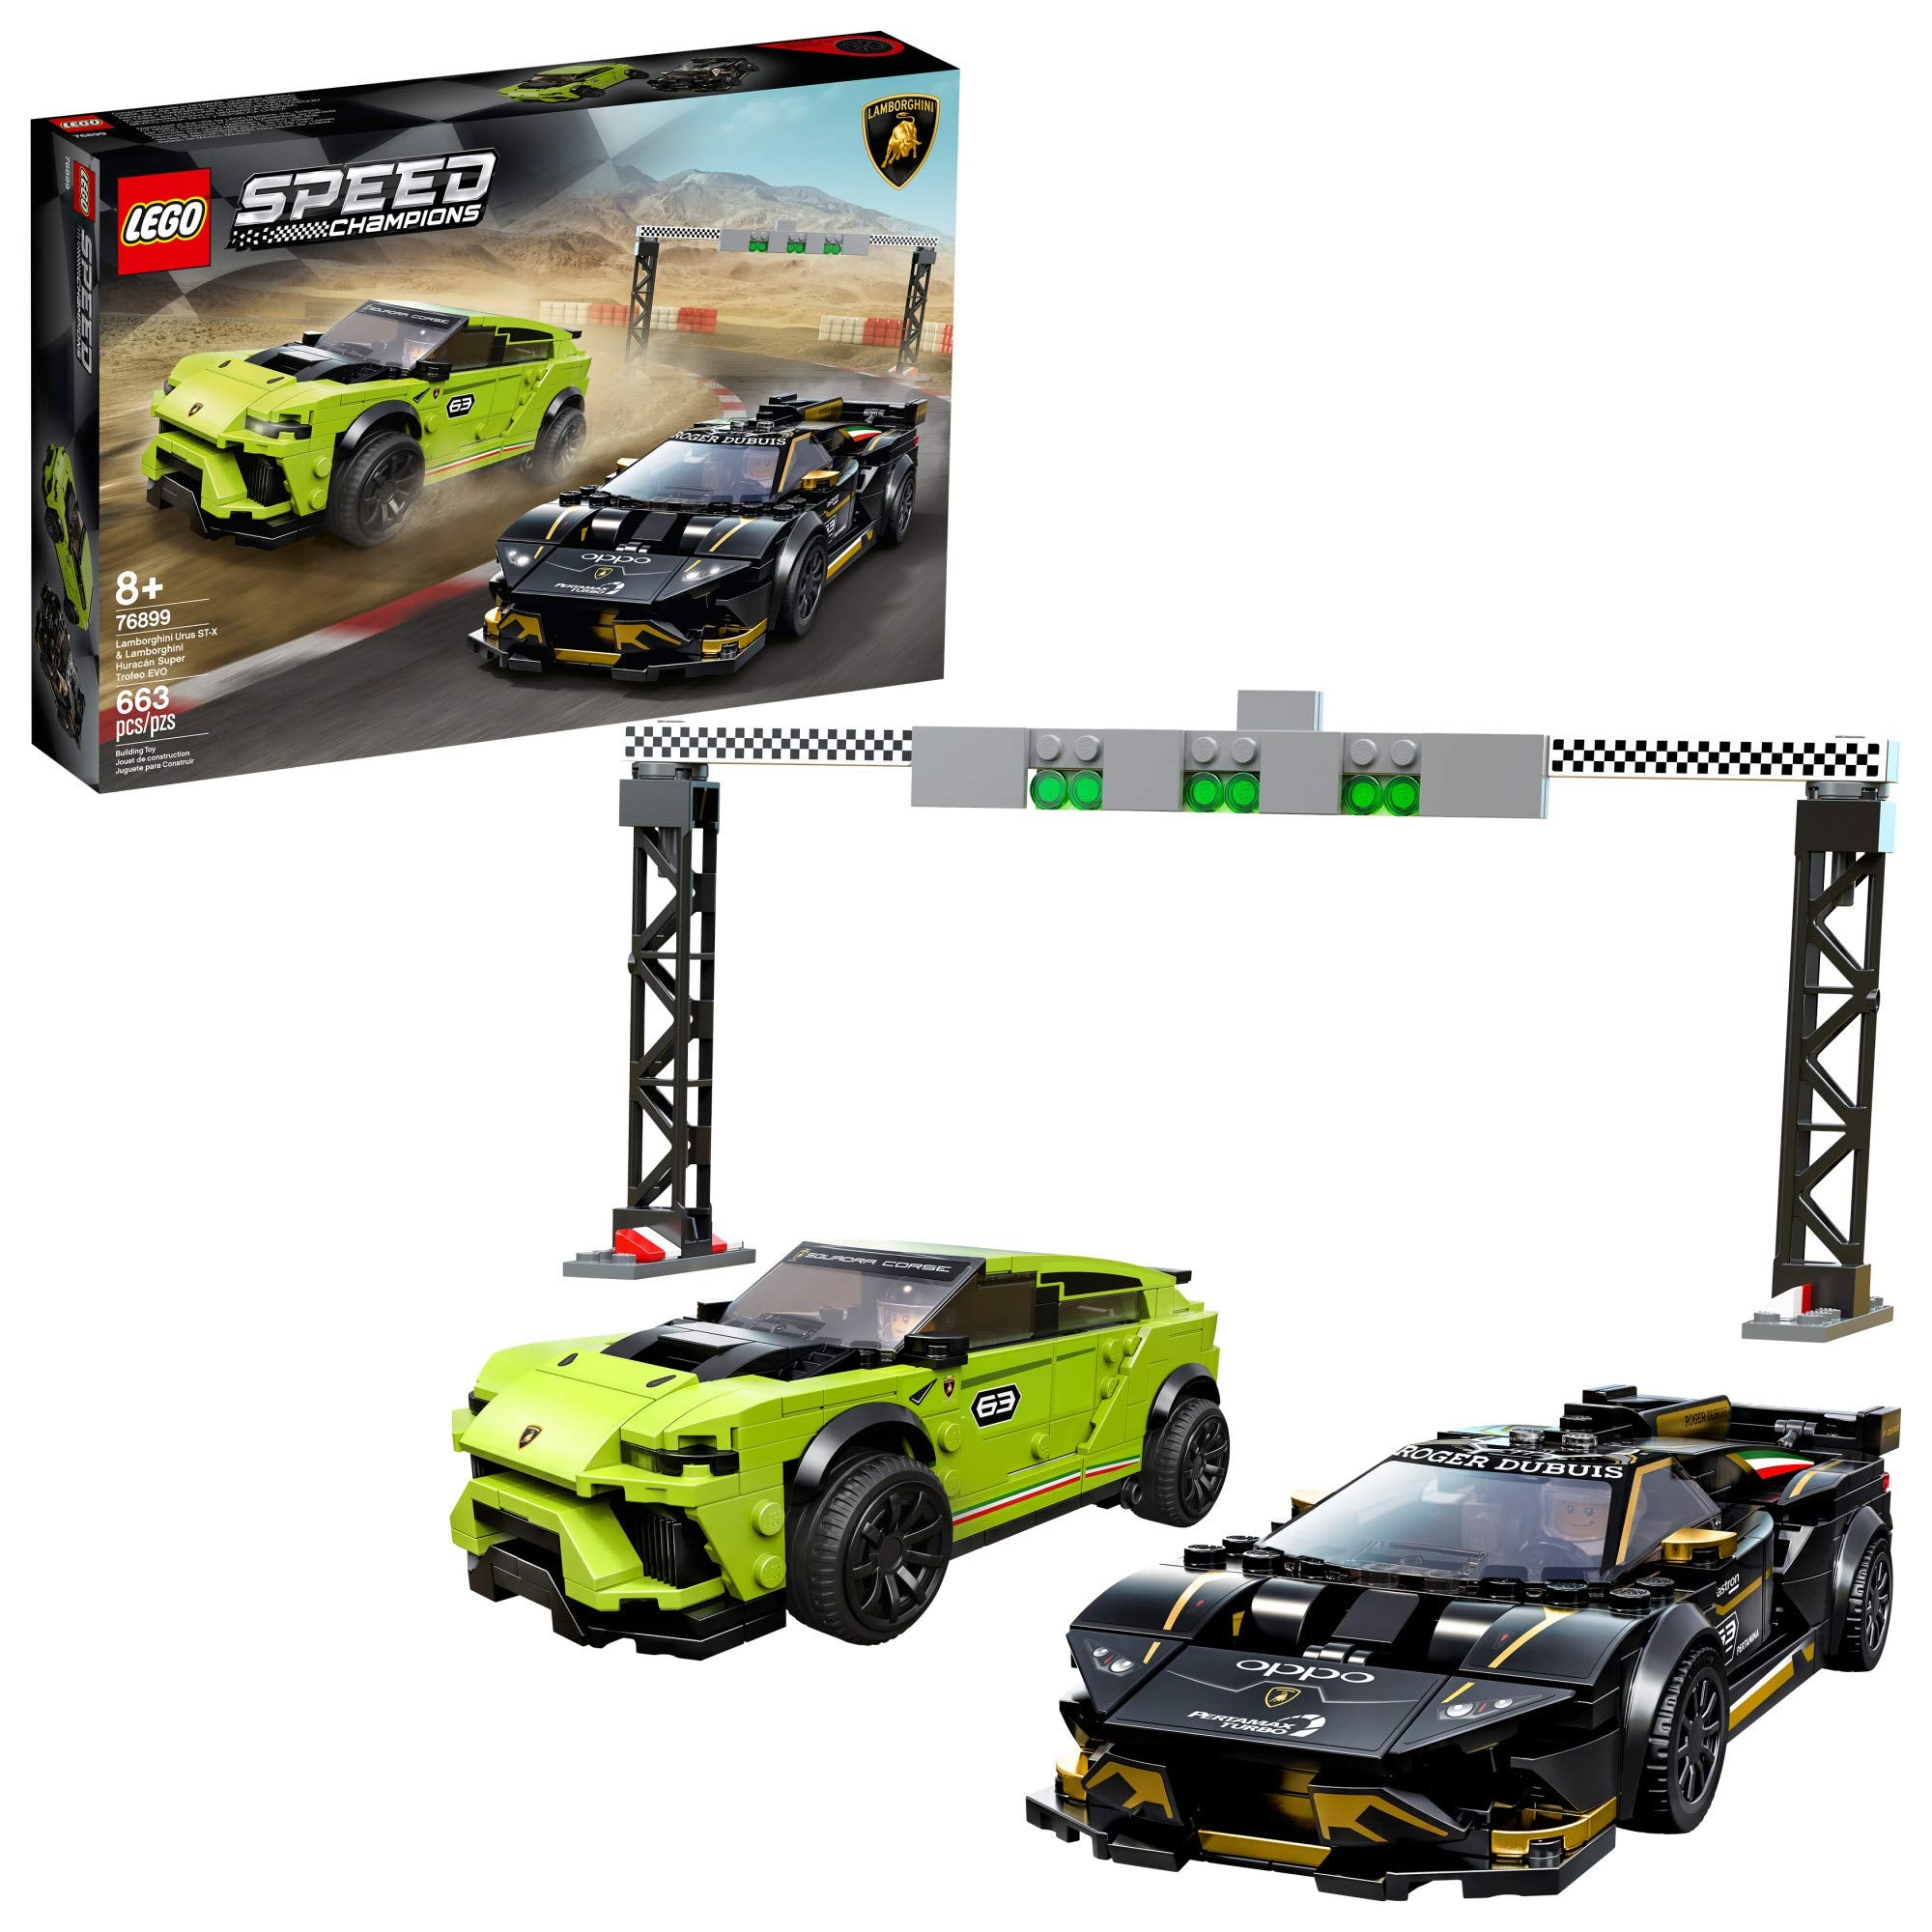 LEGO® SPEED CHAMPIONS 76908 LAMBORGHINI COUNTACH, AGE 8+, BUILDING